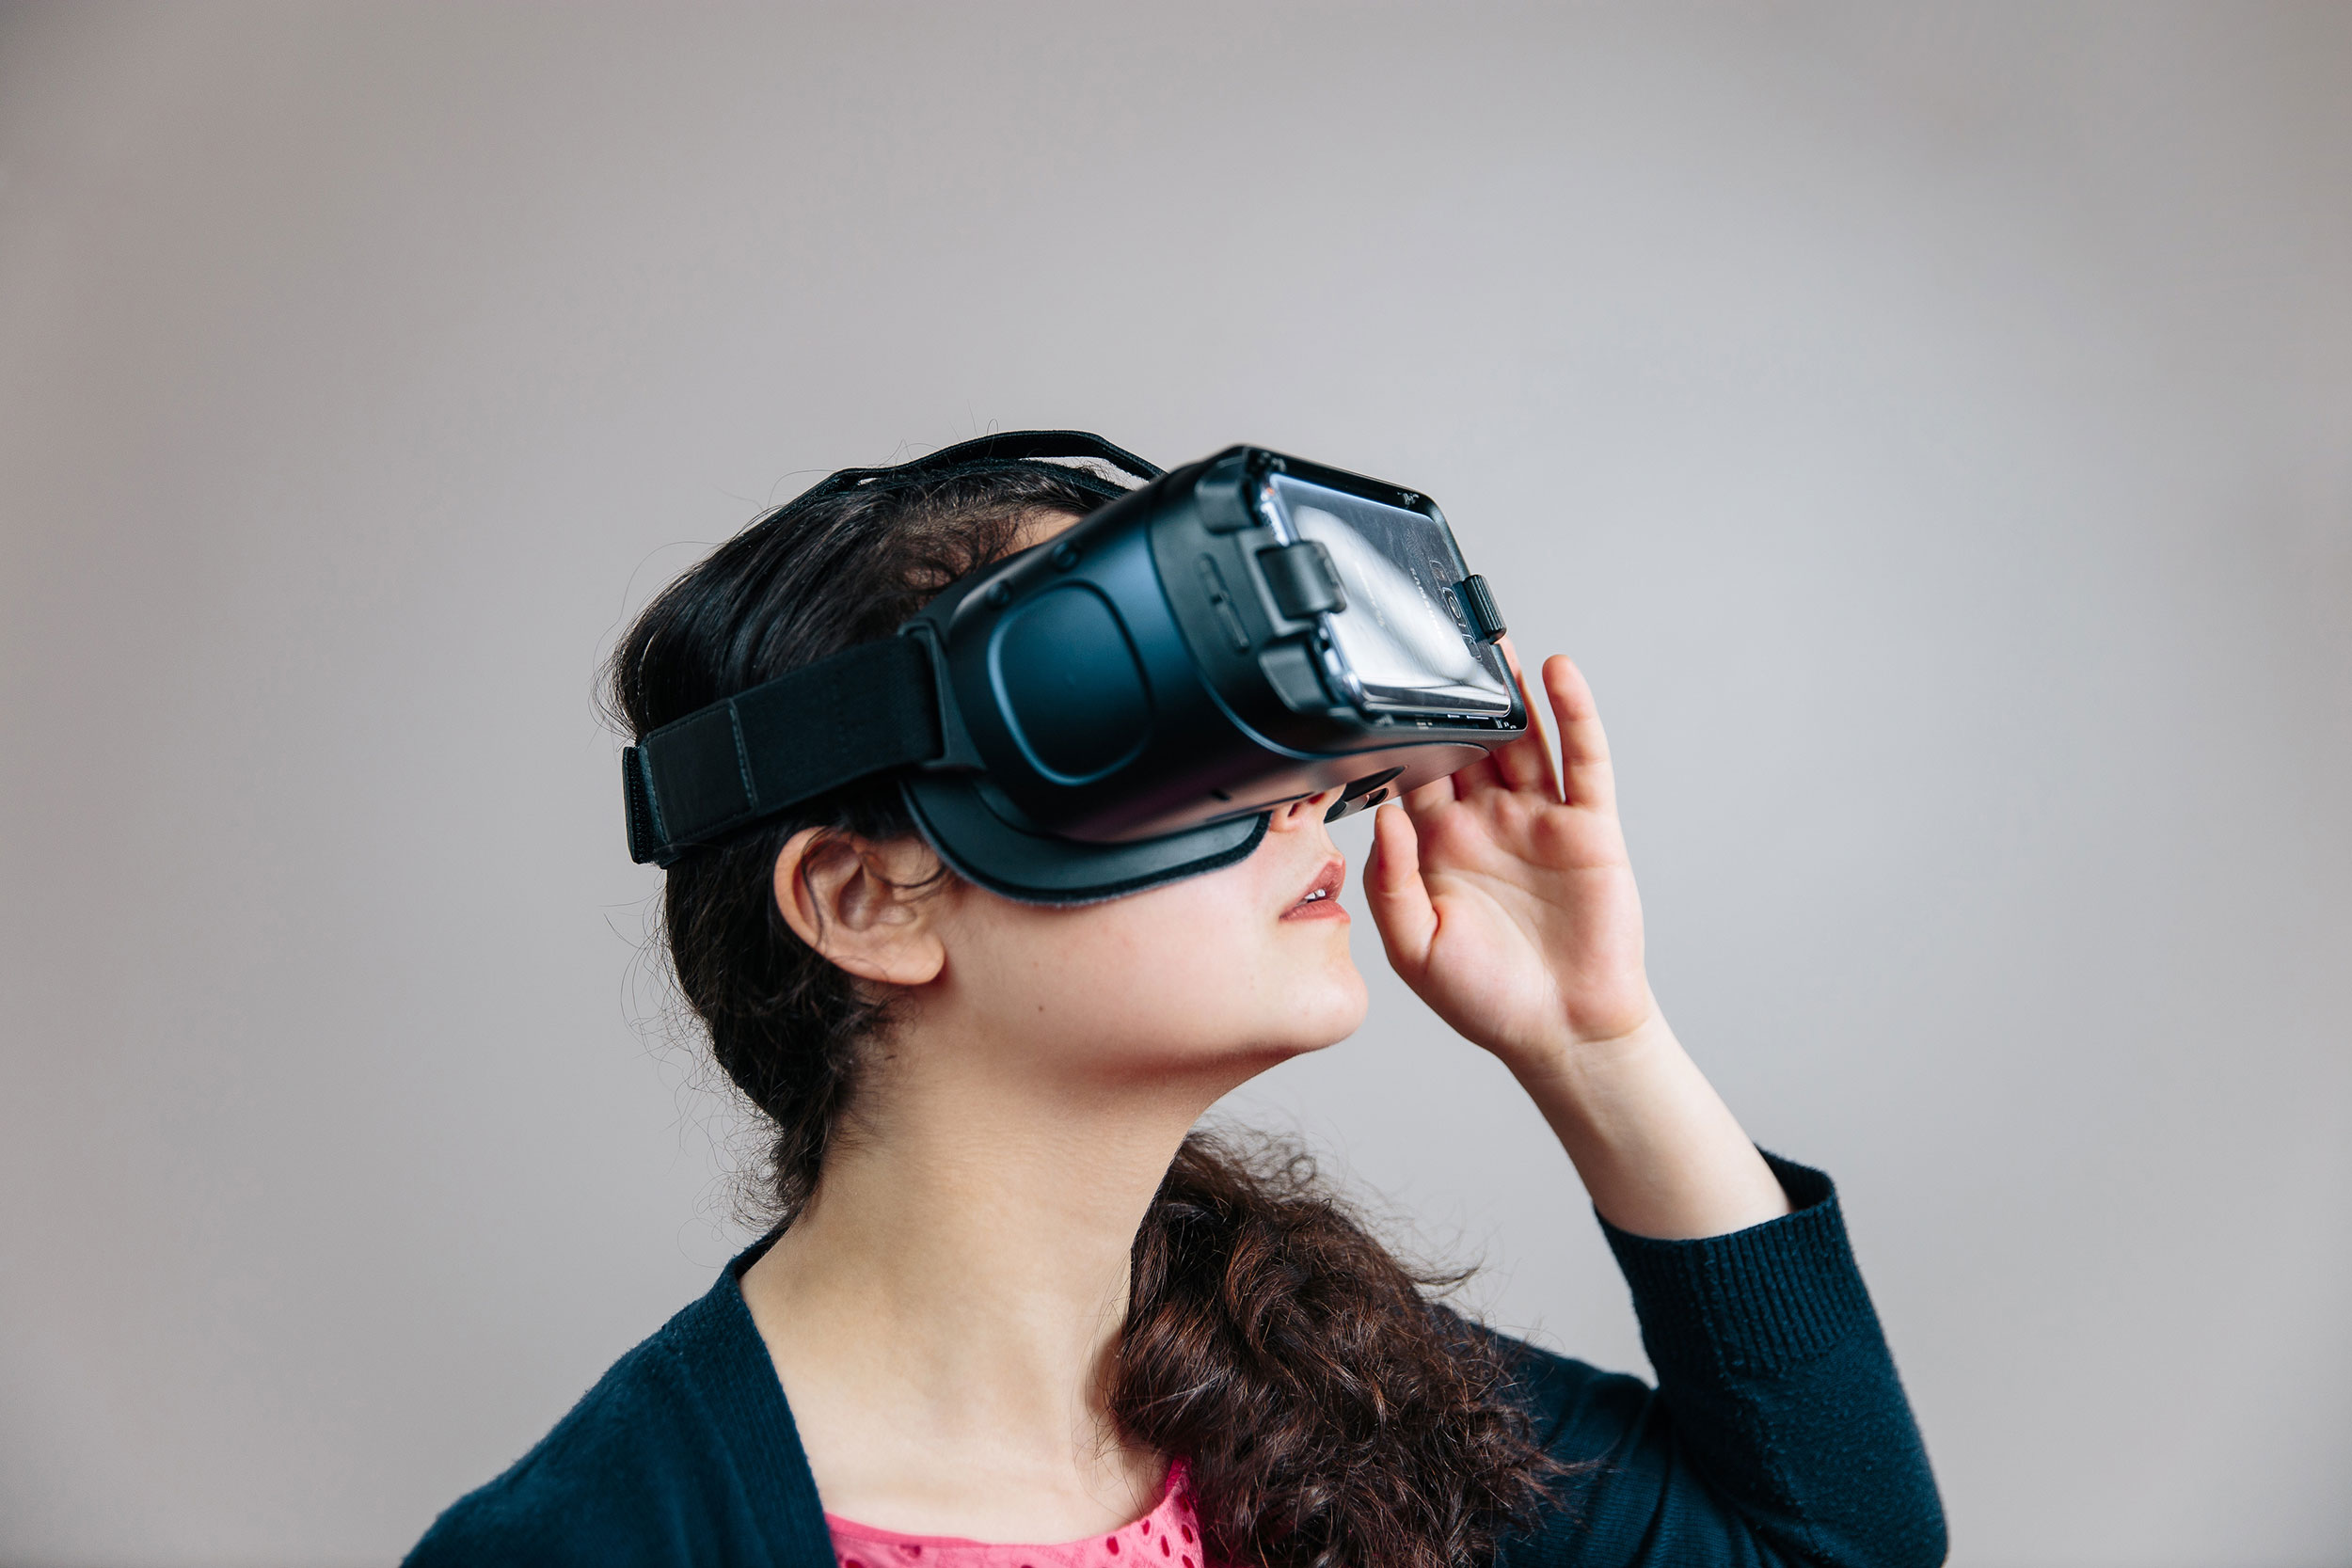 Maria Jernigan demonstrates a virtual reality headset